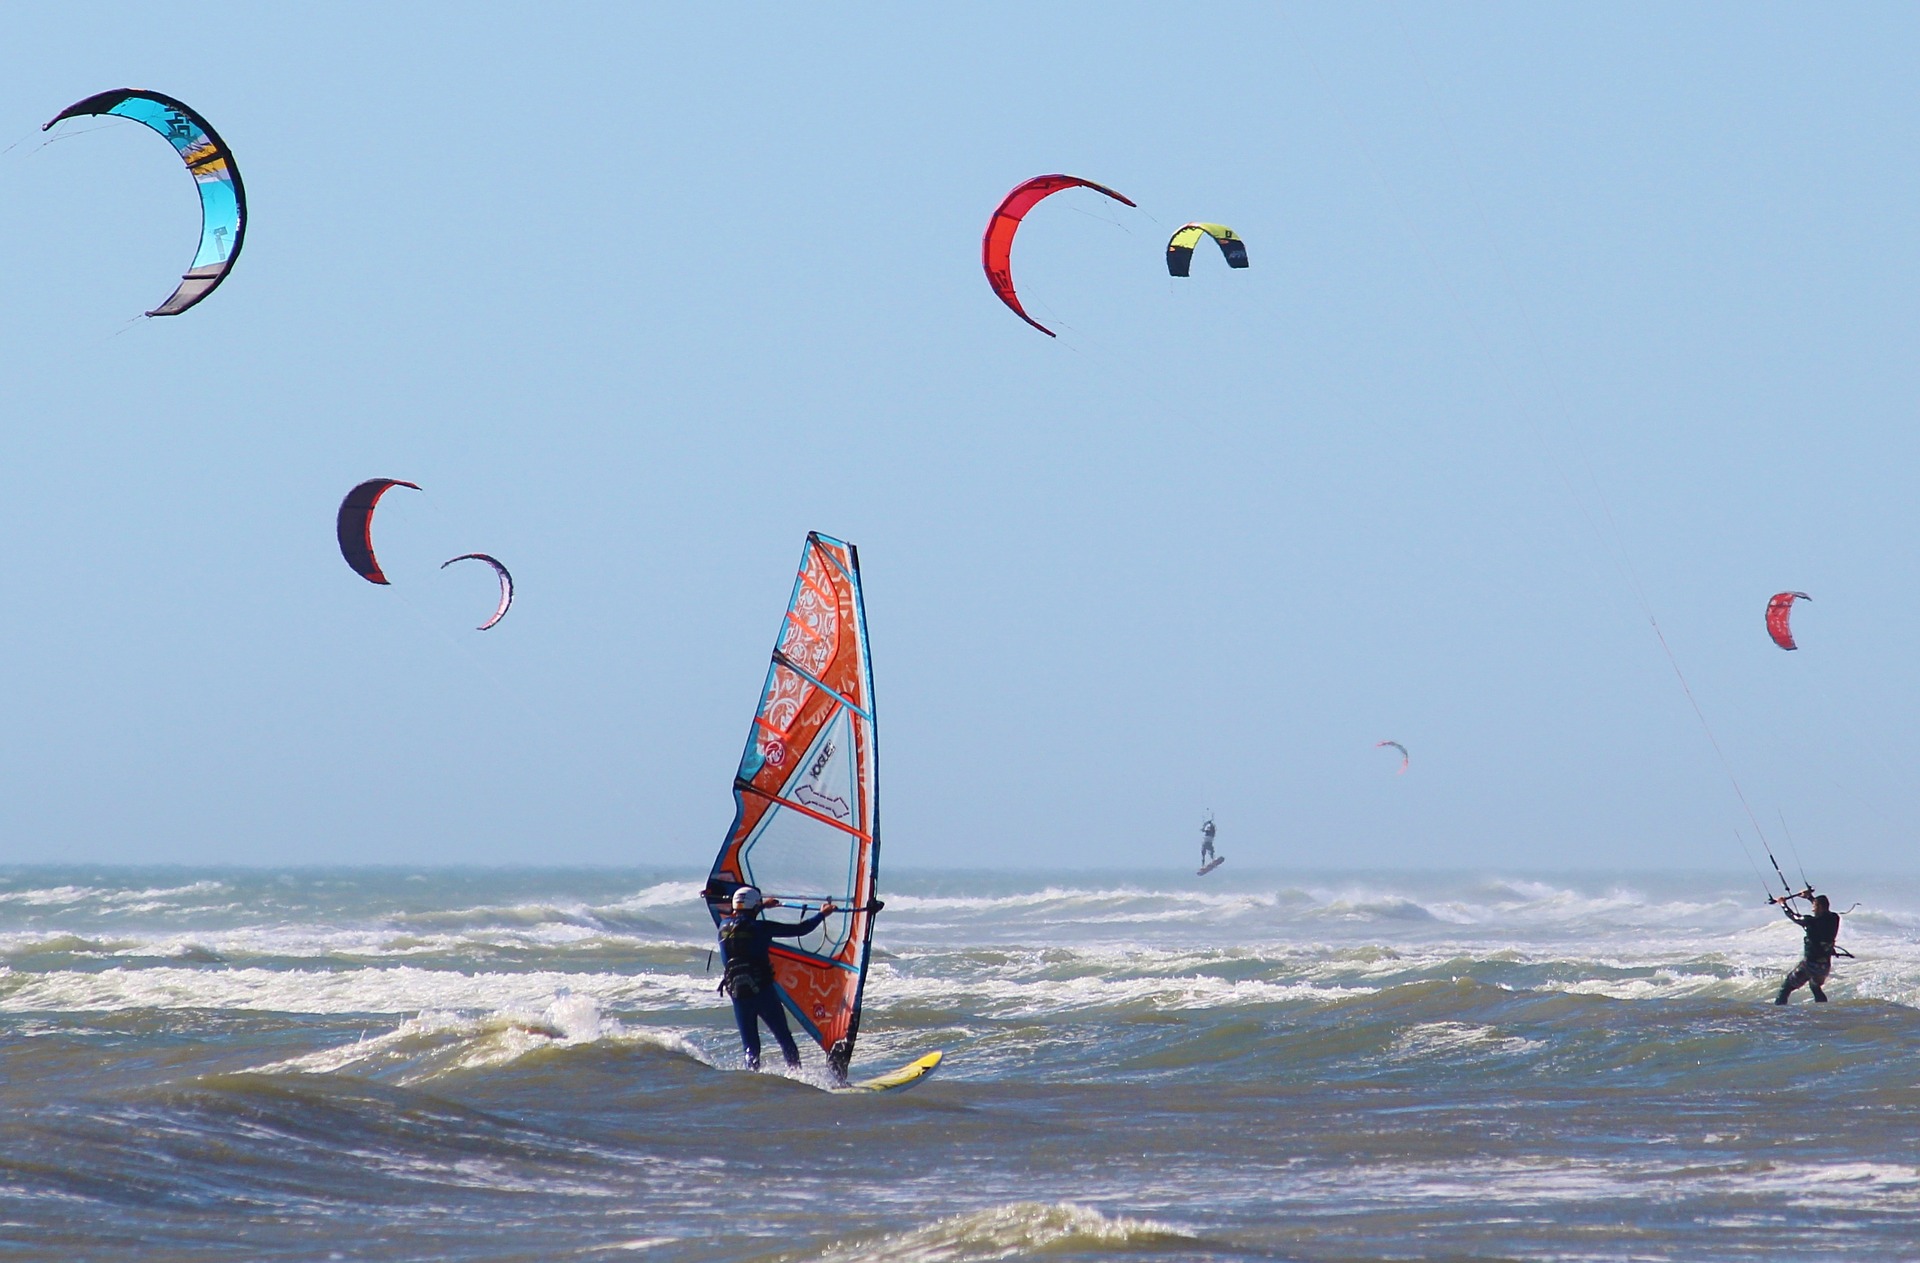 Kitesurfing - Kitesurfers surf across the ocean waves.